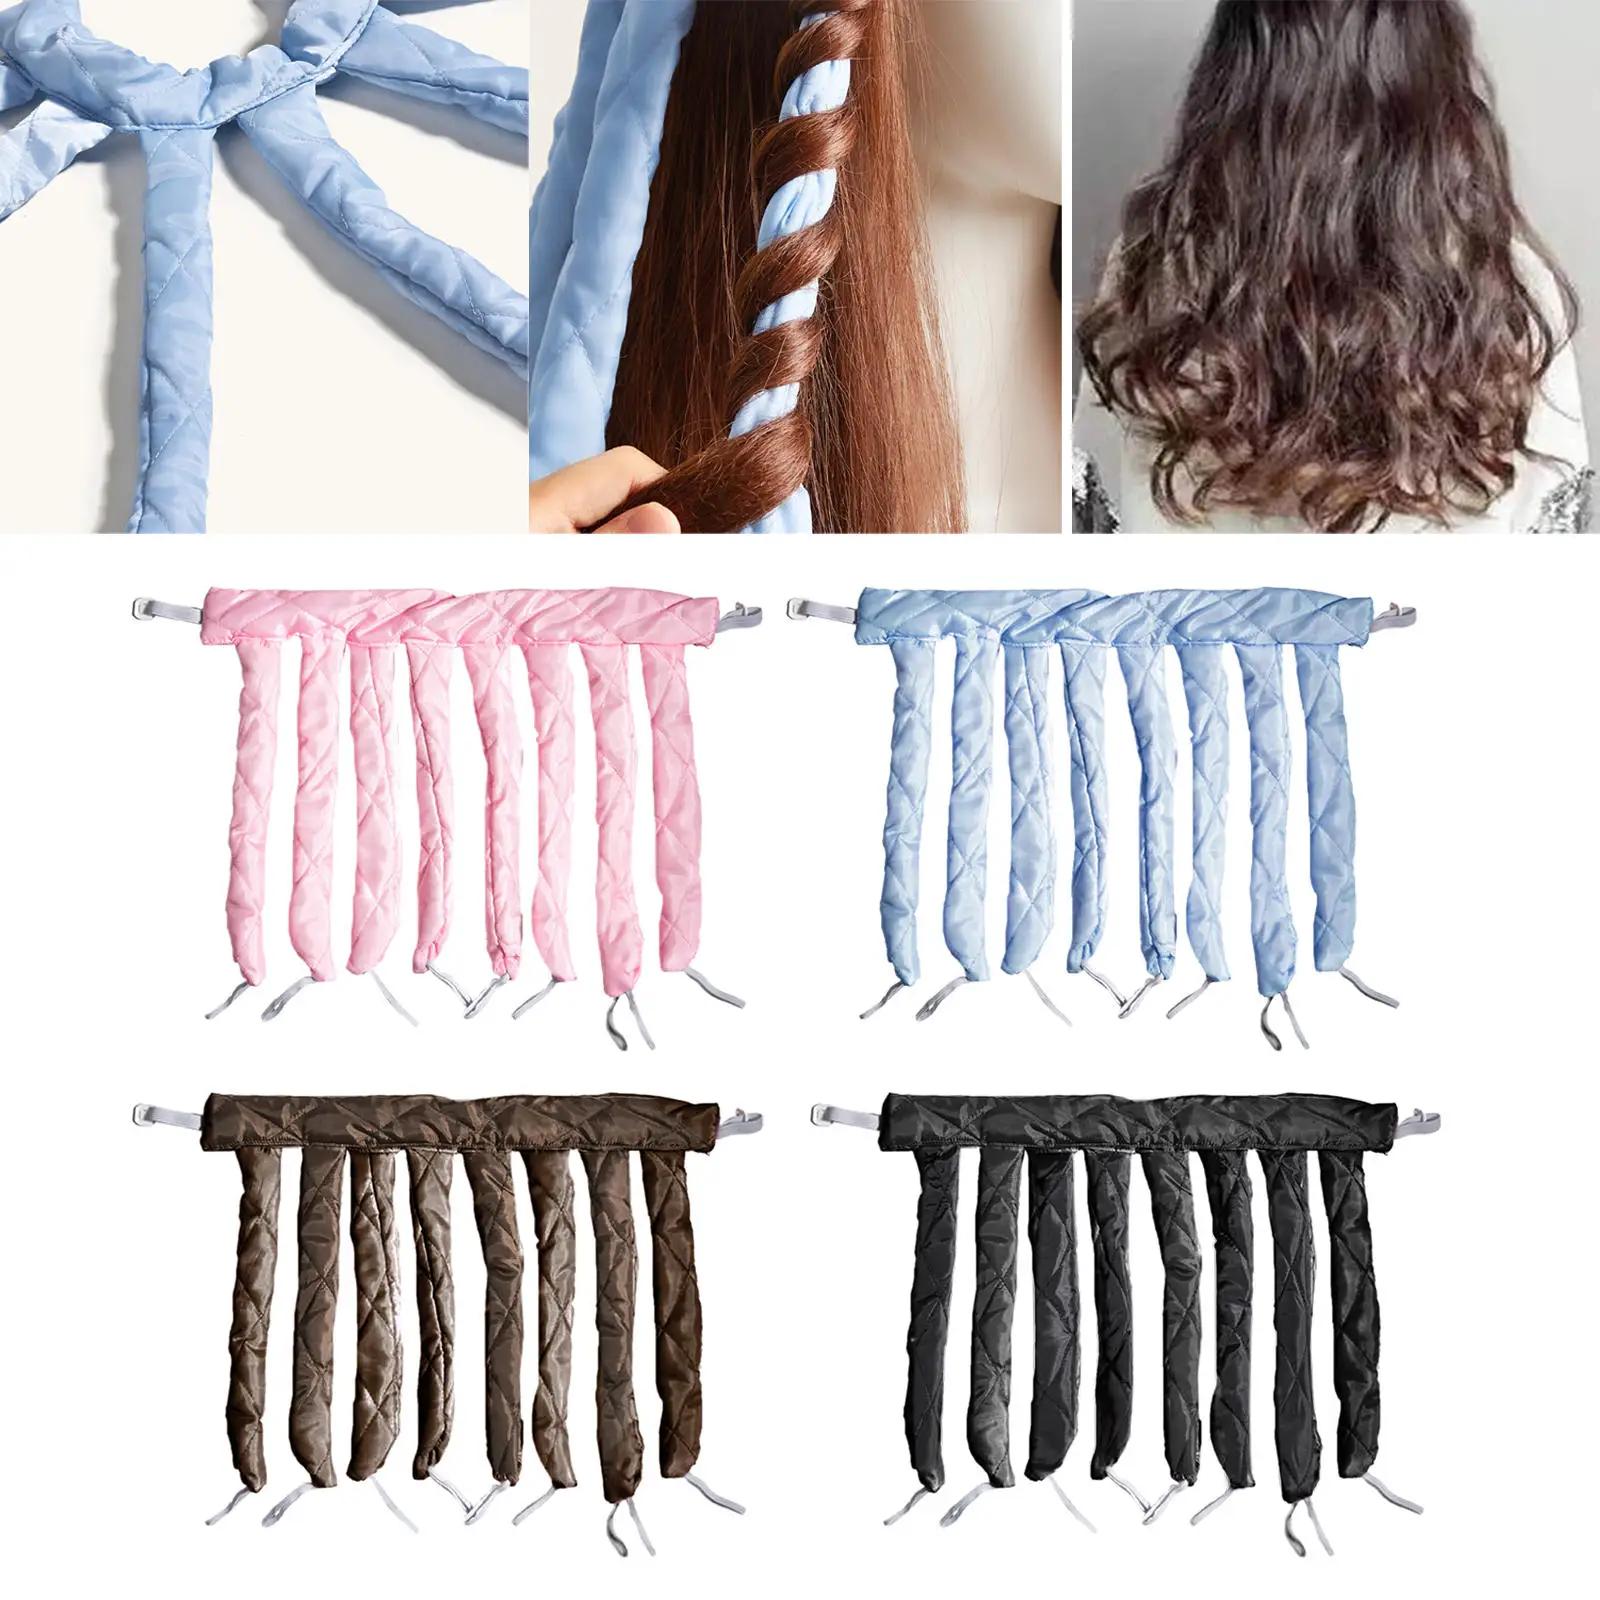 Soft No Heat Hair Curlers Practical Wavy Hairstyles Hair Curling Tool Curls Ribbon for Sleeping